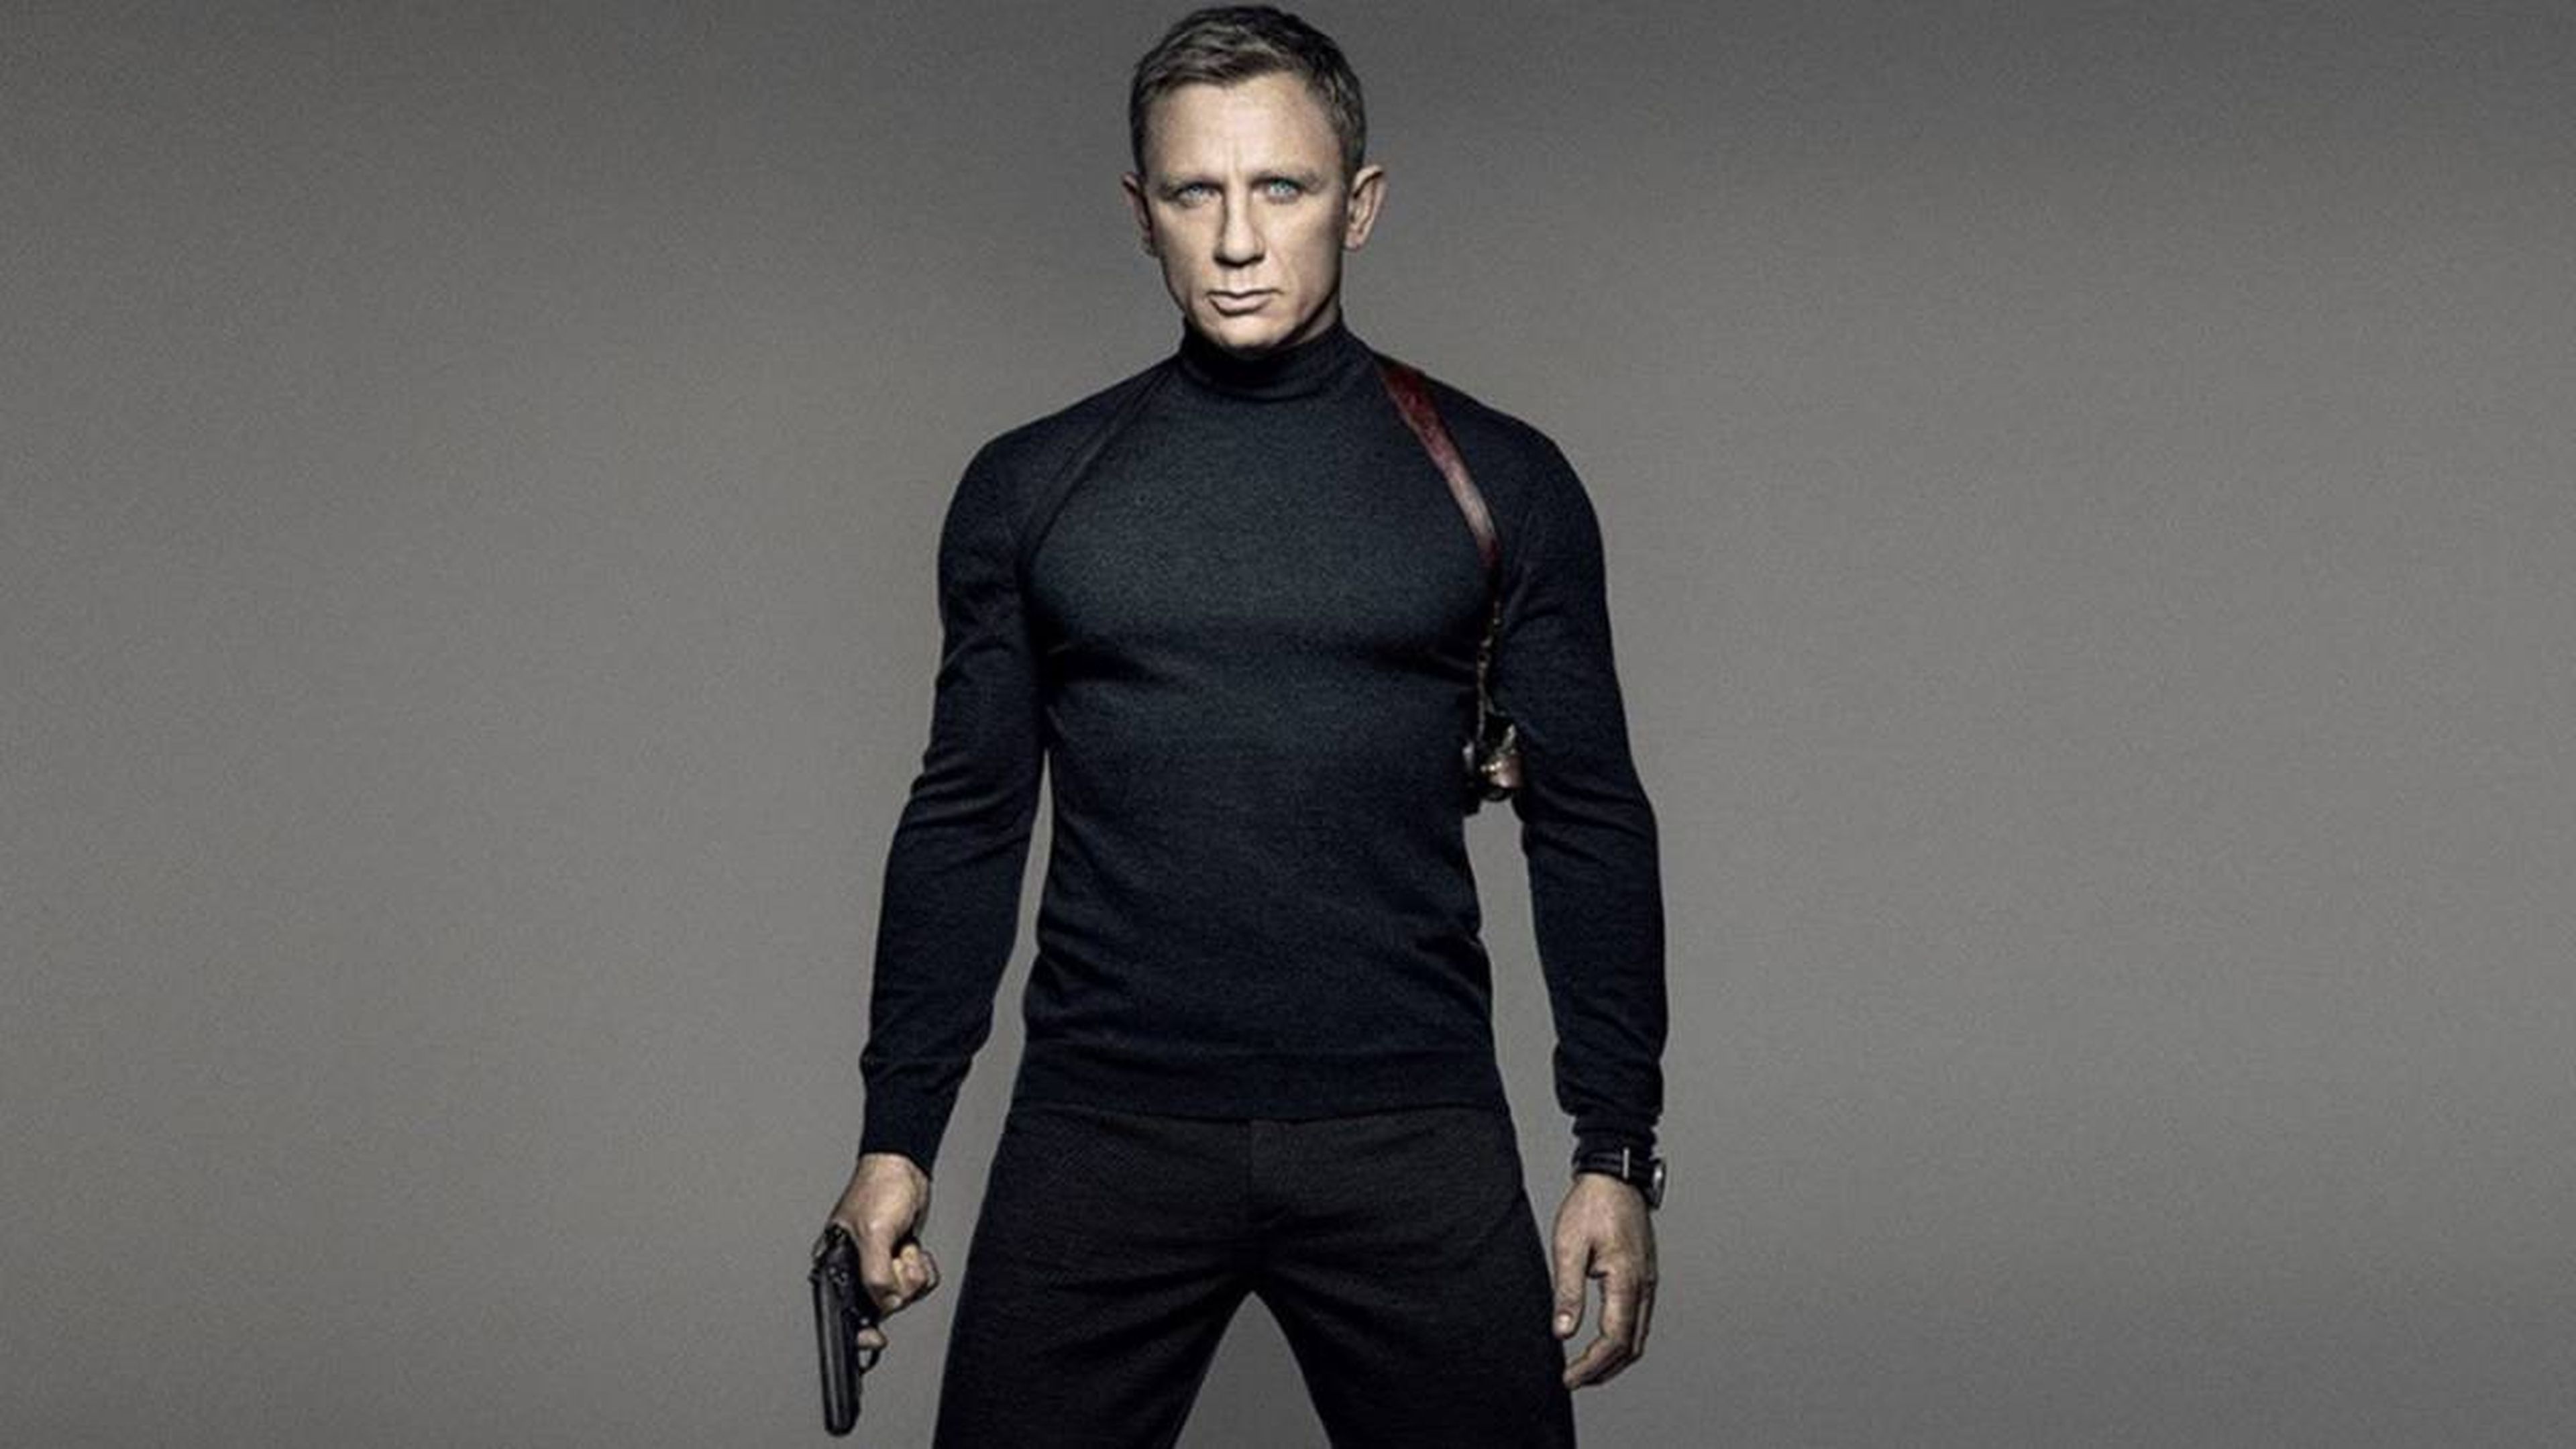 James Bond interpretado por Daniel Craig